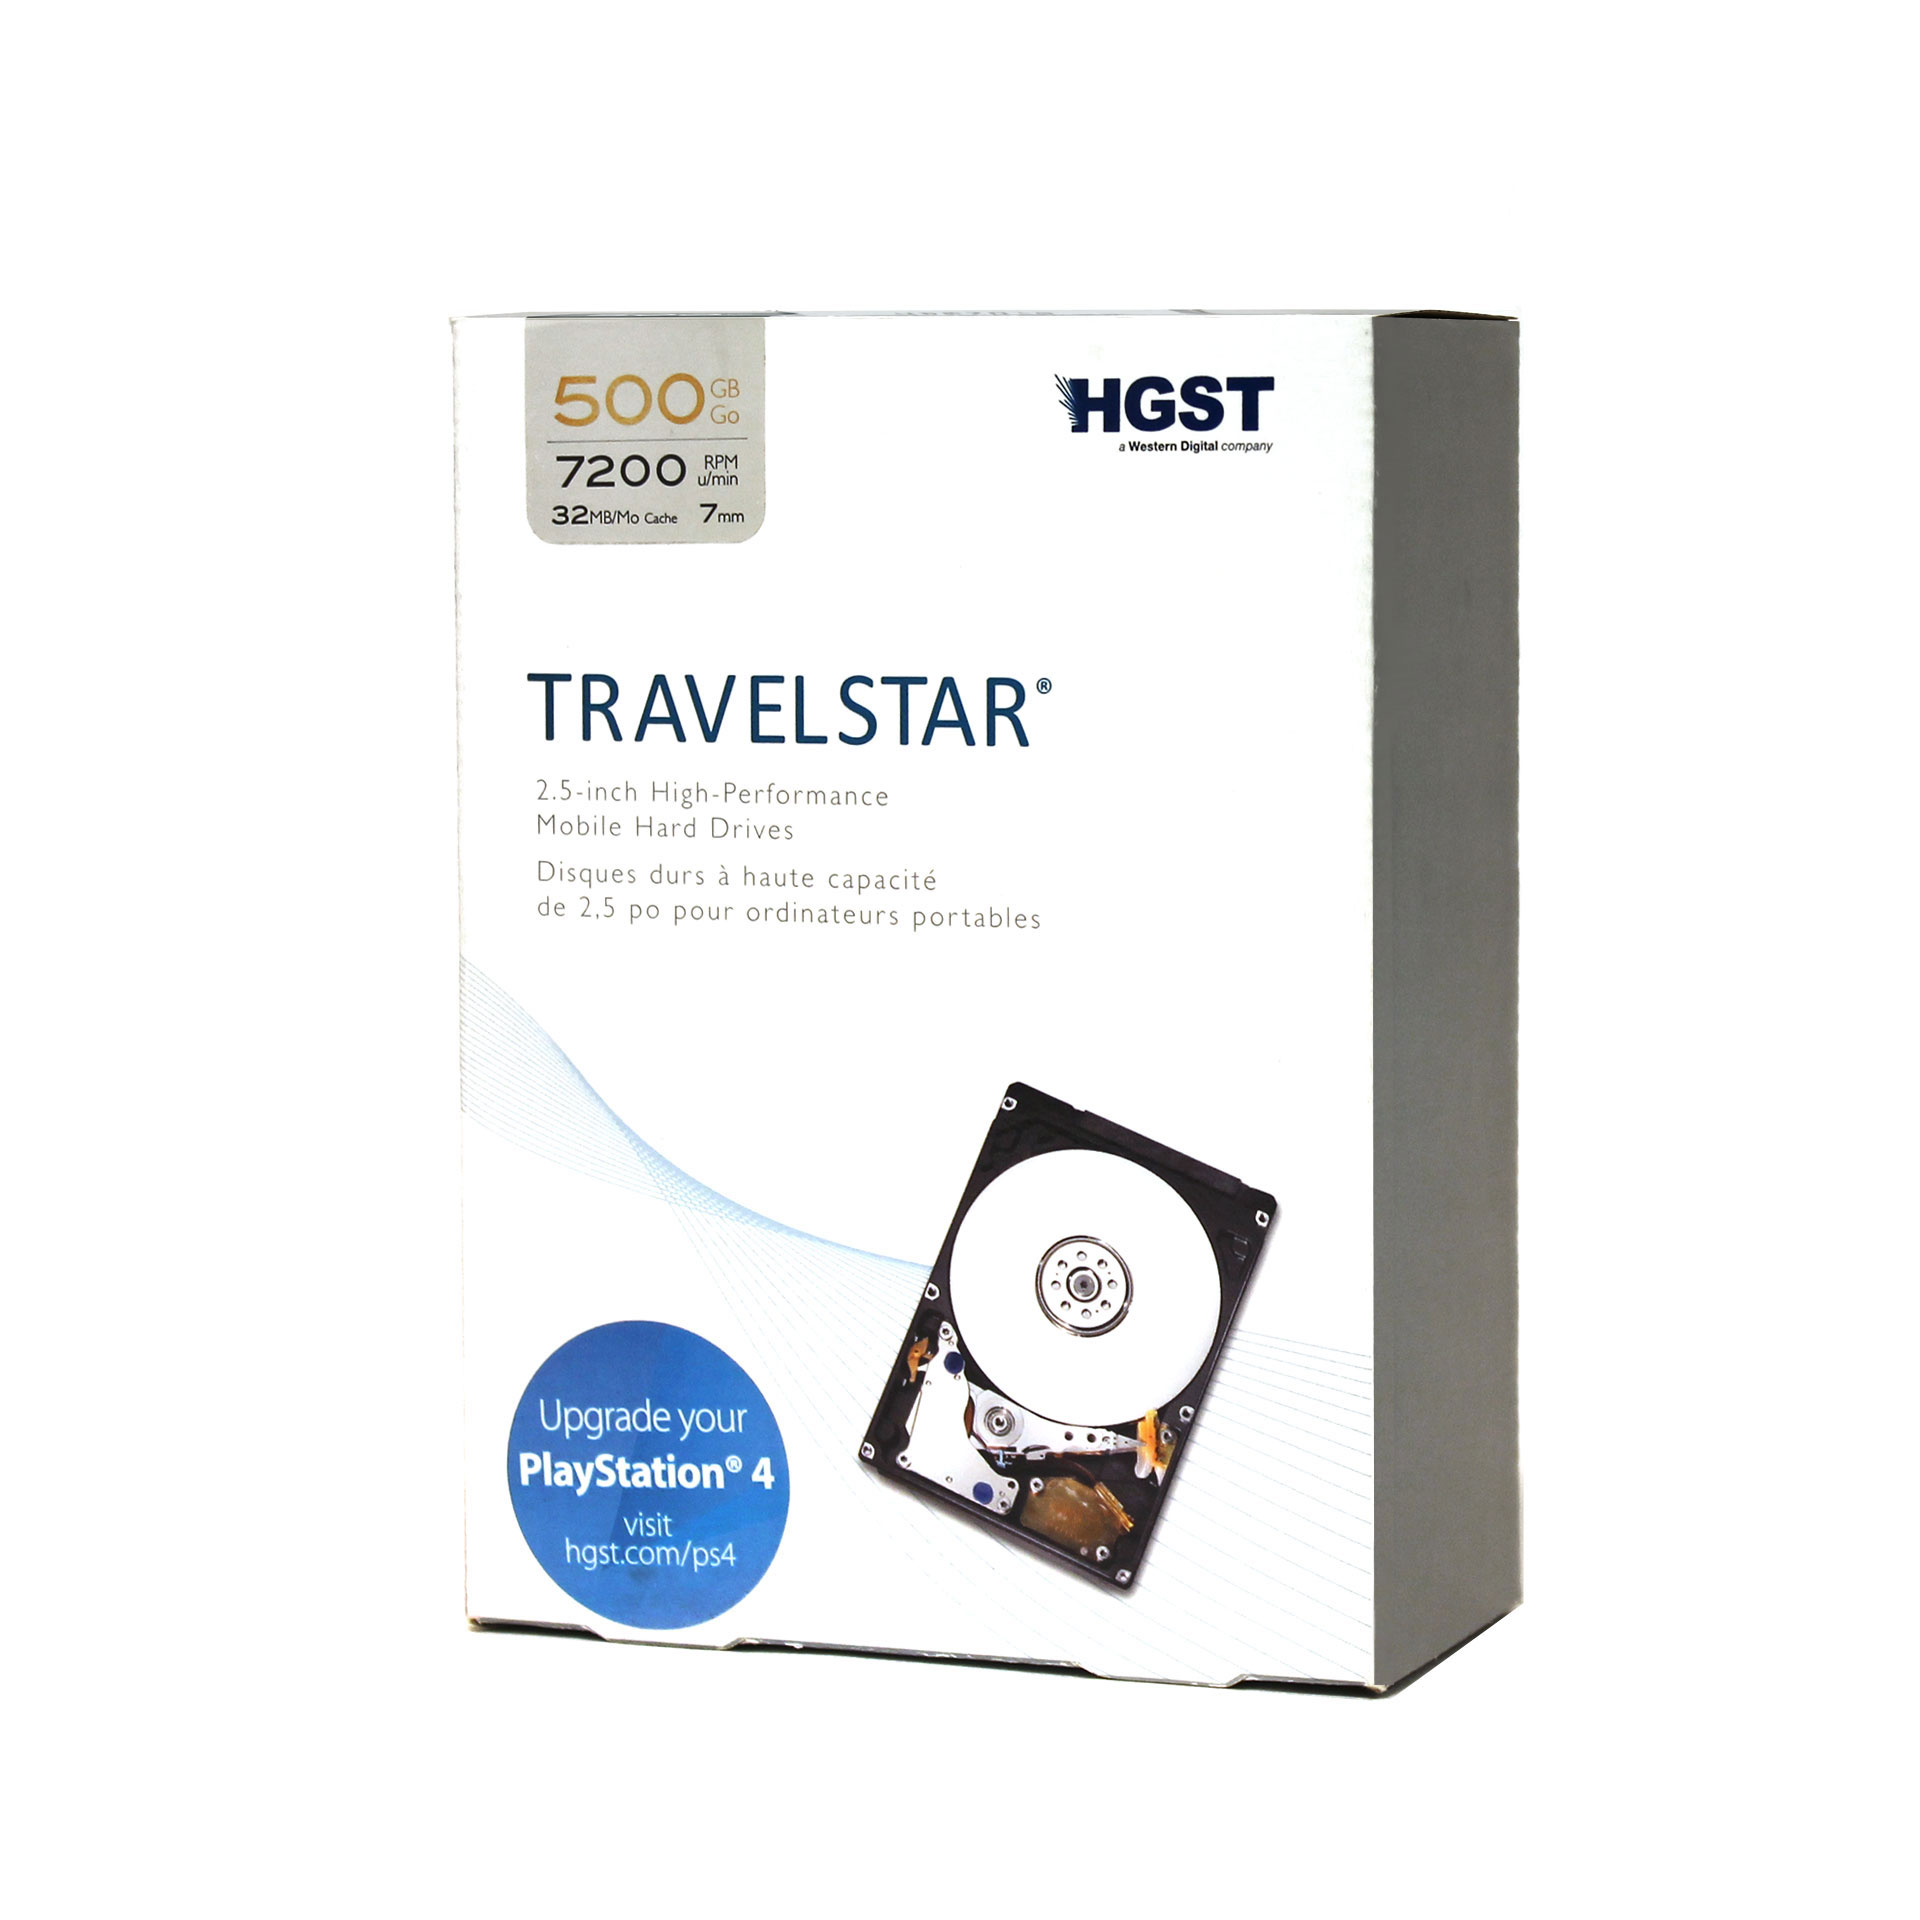 HGST Travelstar 500Gb HTS725050A7E630 2.5" Notebook Hard Drive